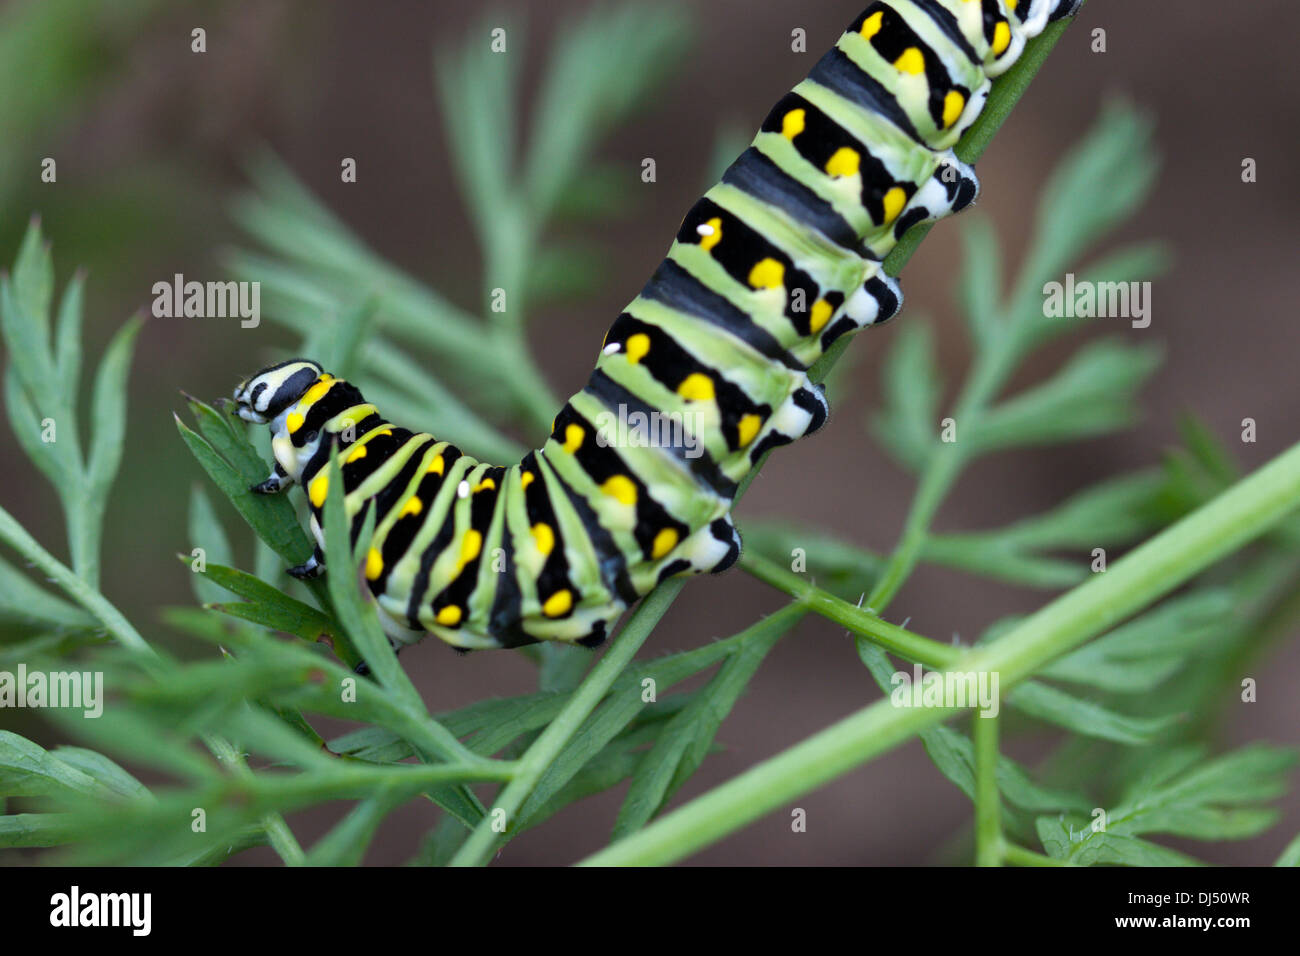 Insecte papillon machaon tigre caterpillar eating carrot verts Banque D'Images